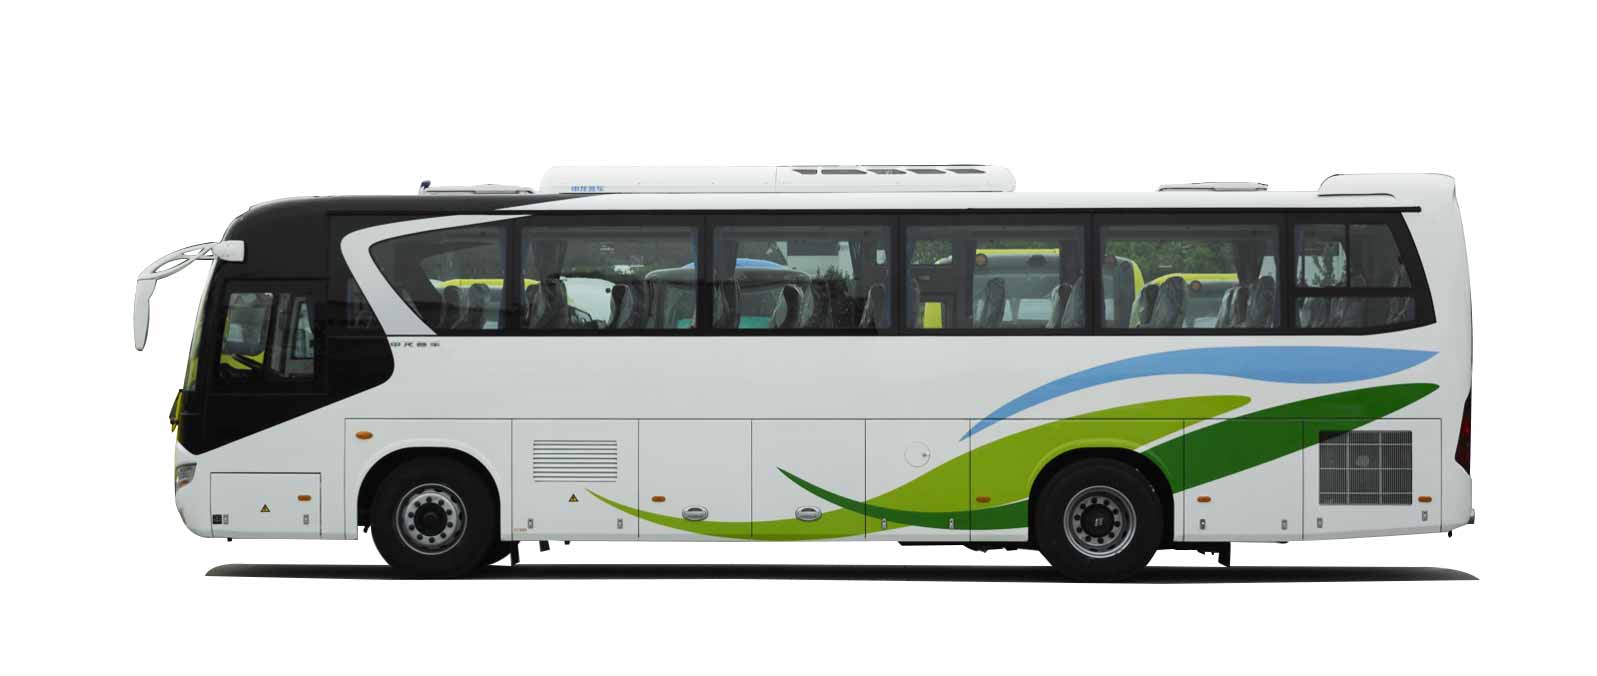 SLK6118混合動力,10-11米,上海申龍客車有限公司,上海申龍客車有限公司-08